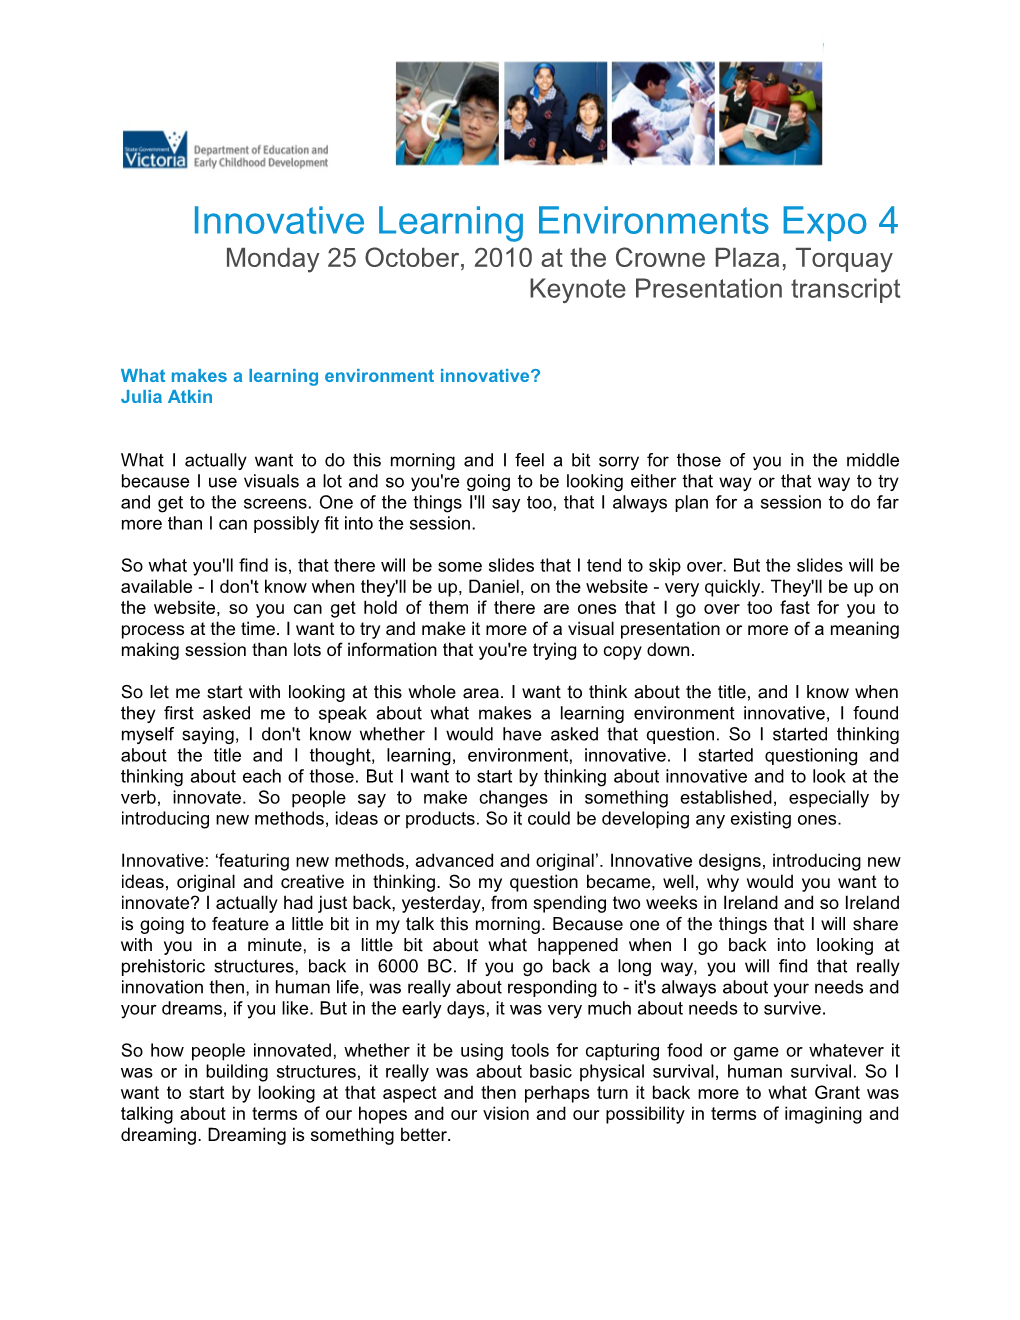 Innovative Learning Environments Expo 4: Julia Atkin